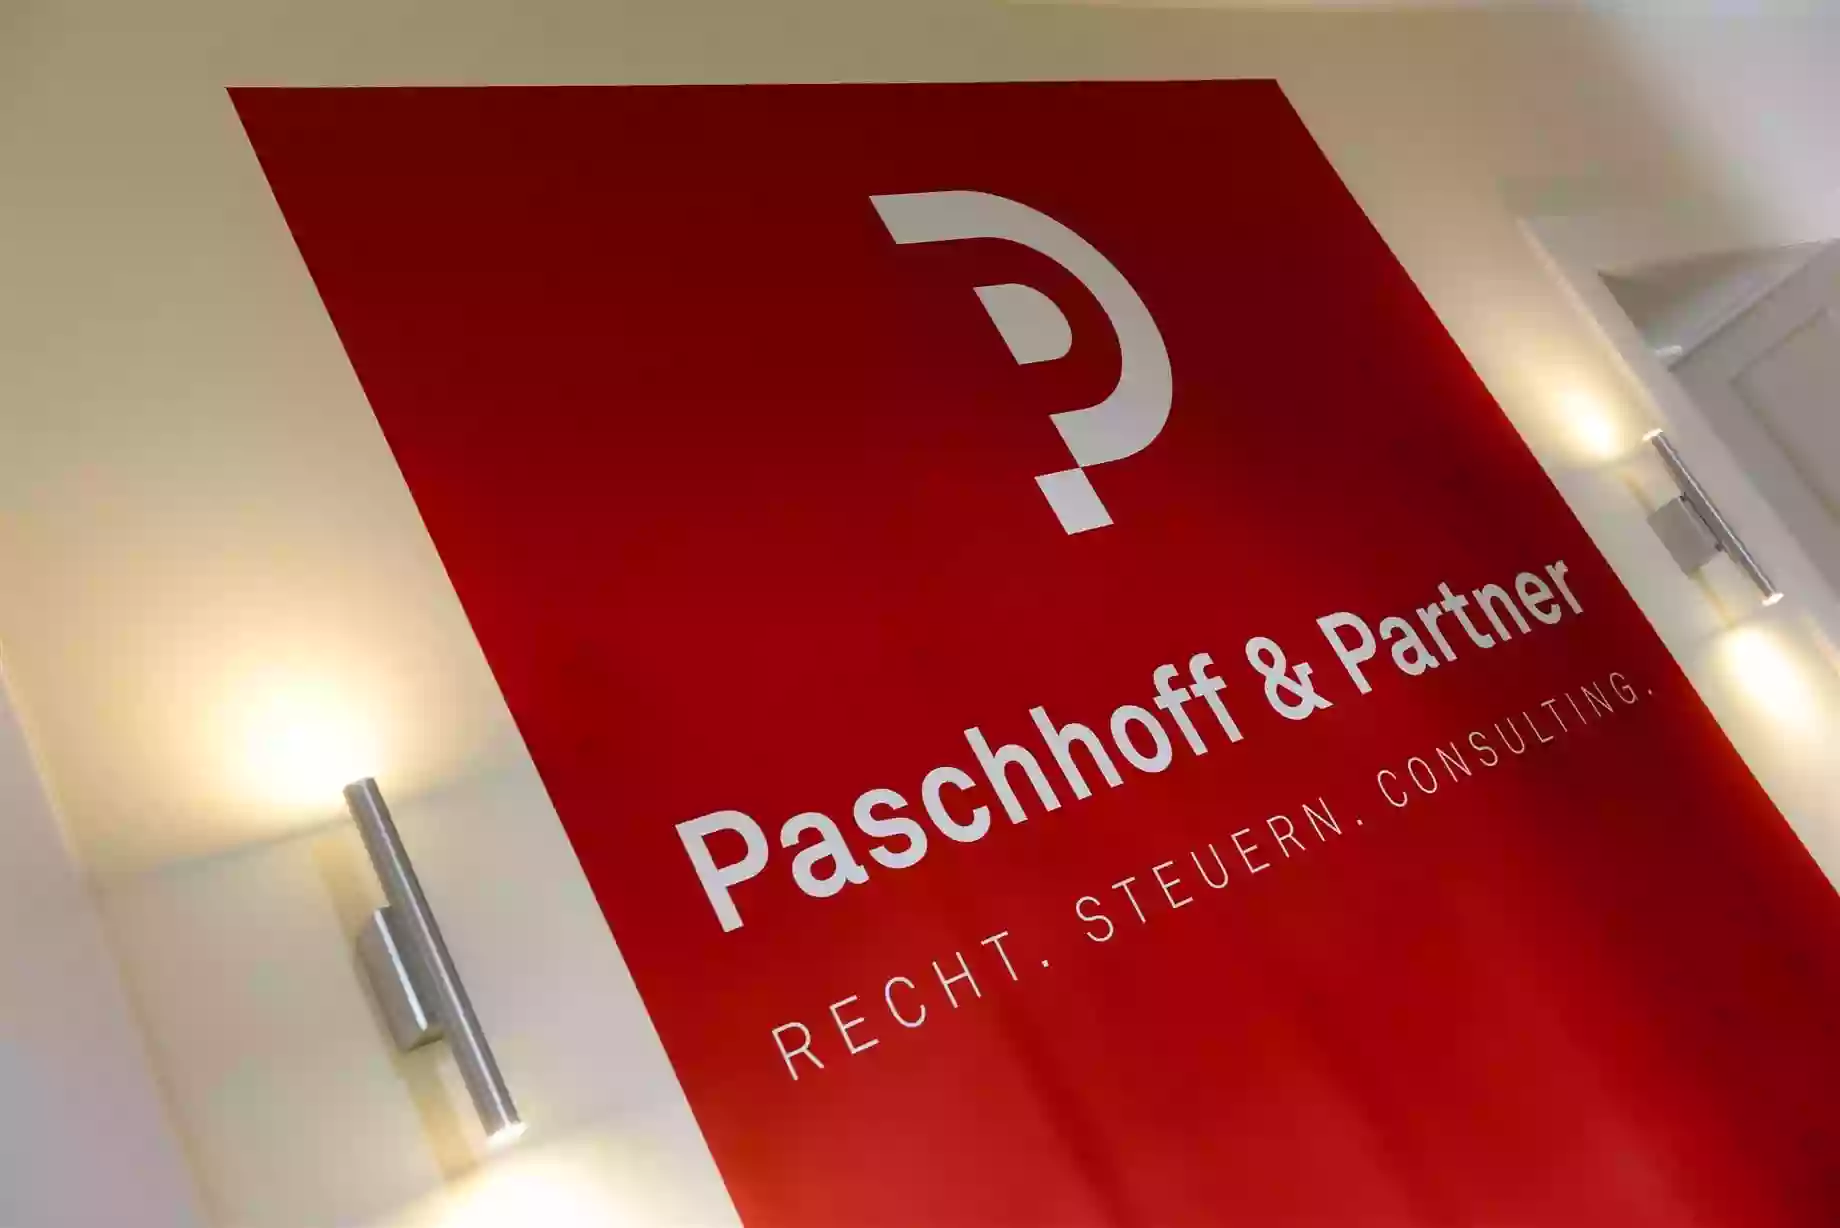 Paschhoff & Partner | Recht. Steuern. Consulting.